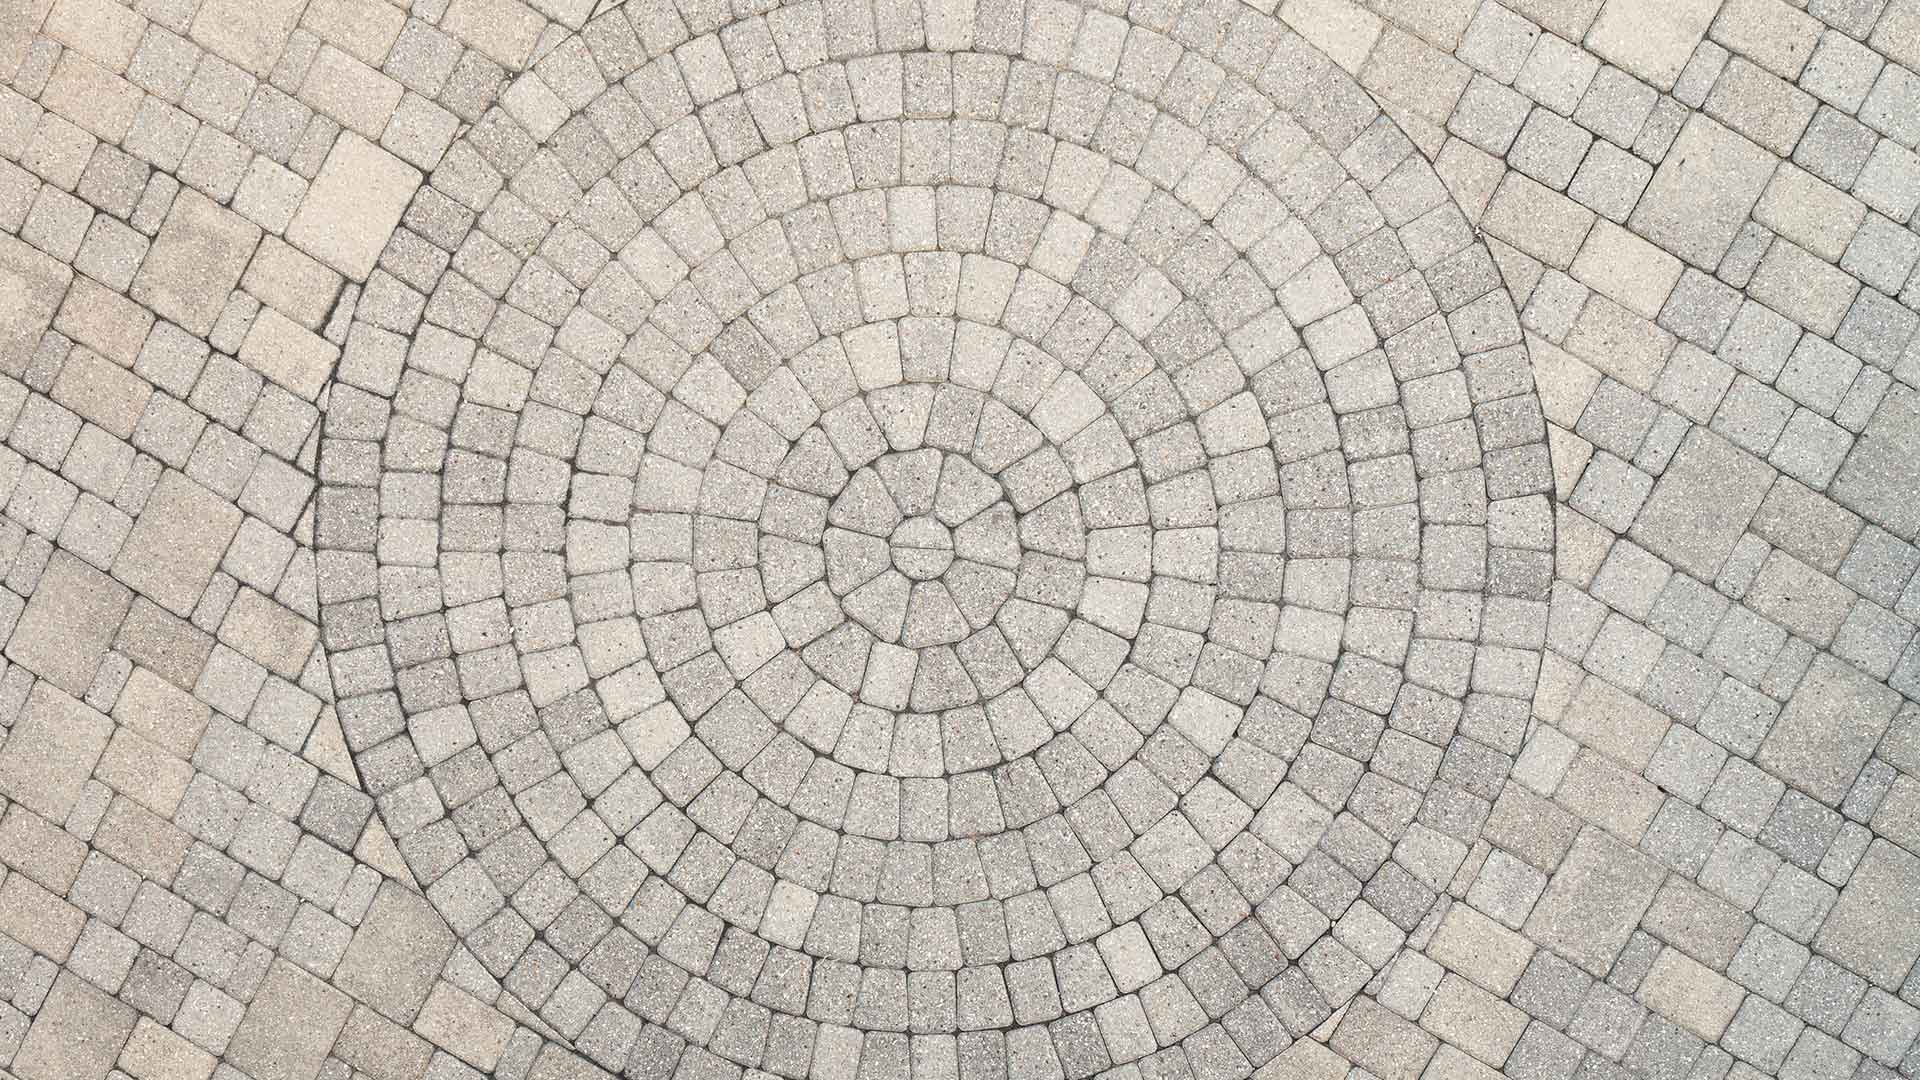 Custom paver patio with circular pattern in Bondurant, IA.